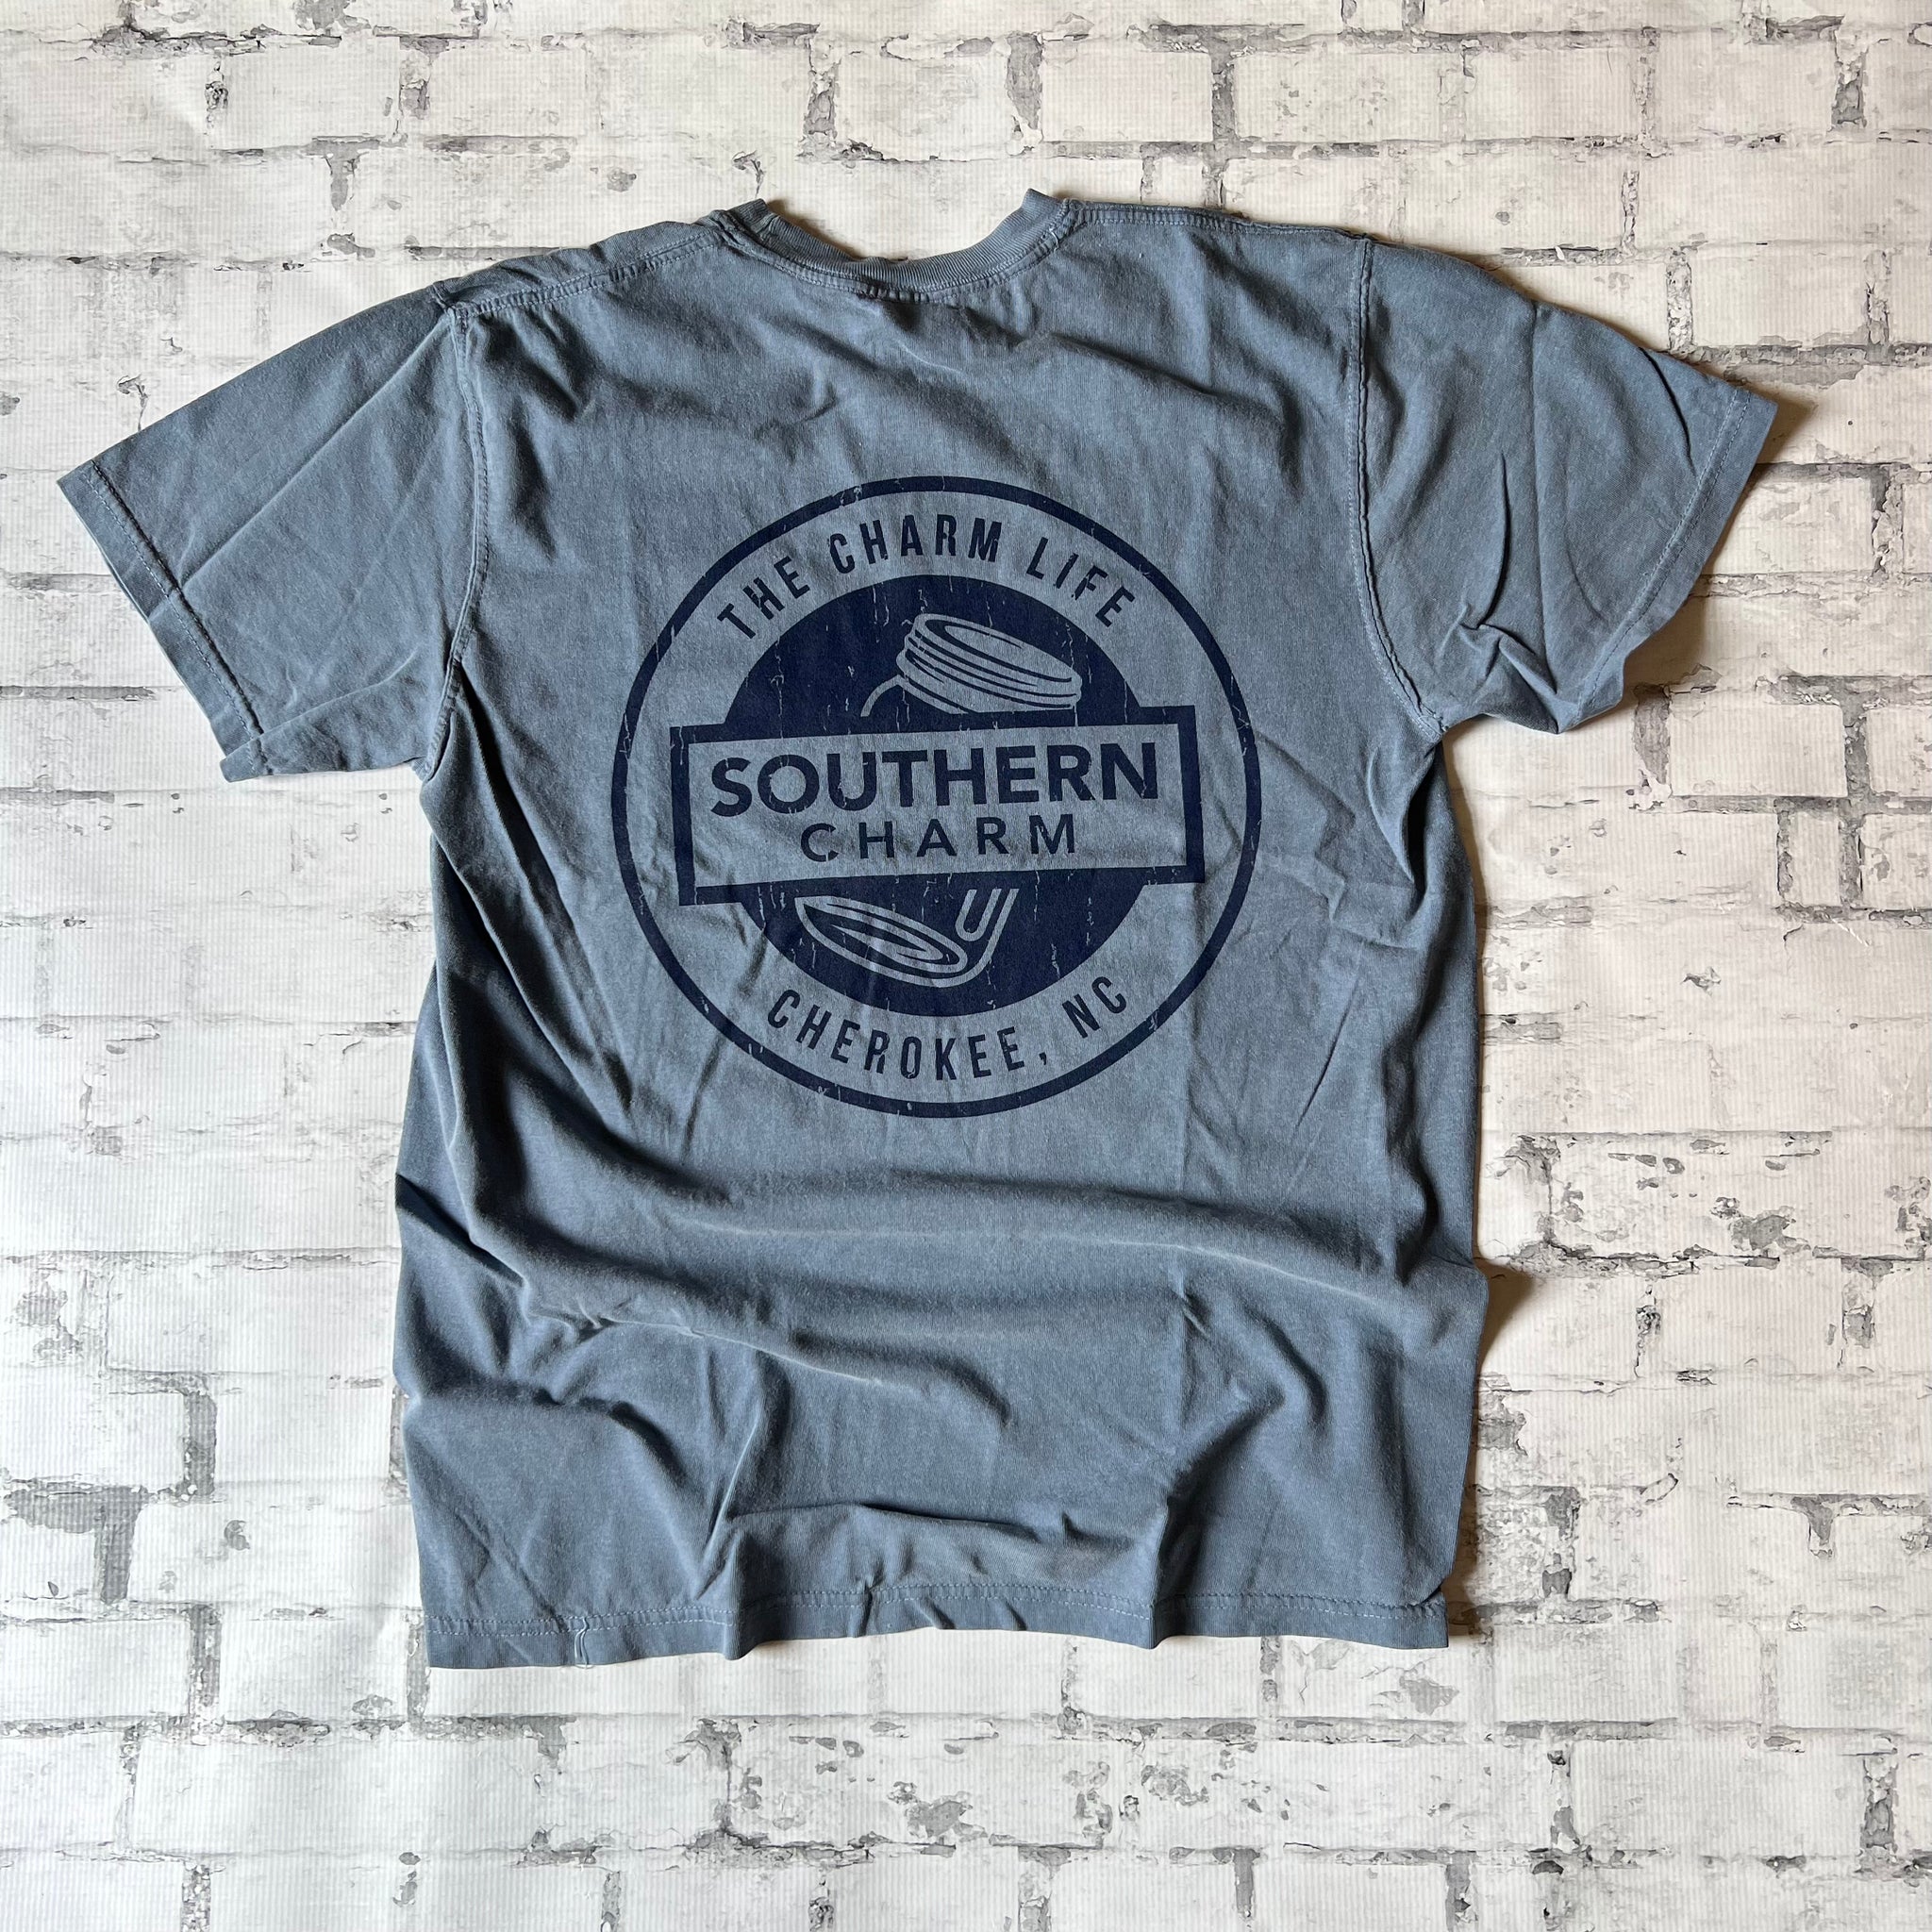 Southern Charm "70'S" Short Sleeve T-shirt - Denim - Southern Charm "Shop The Charm"